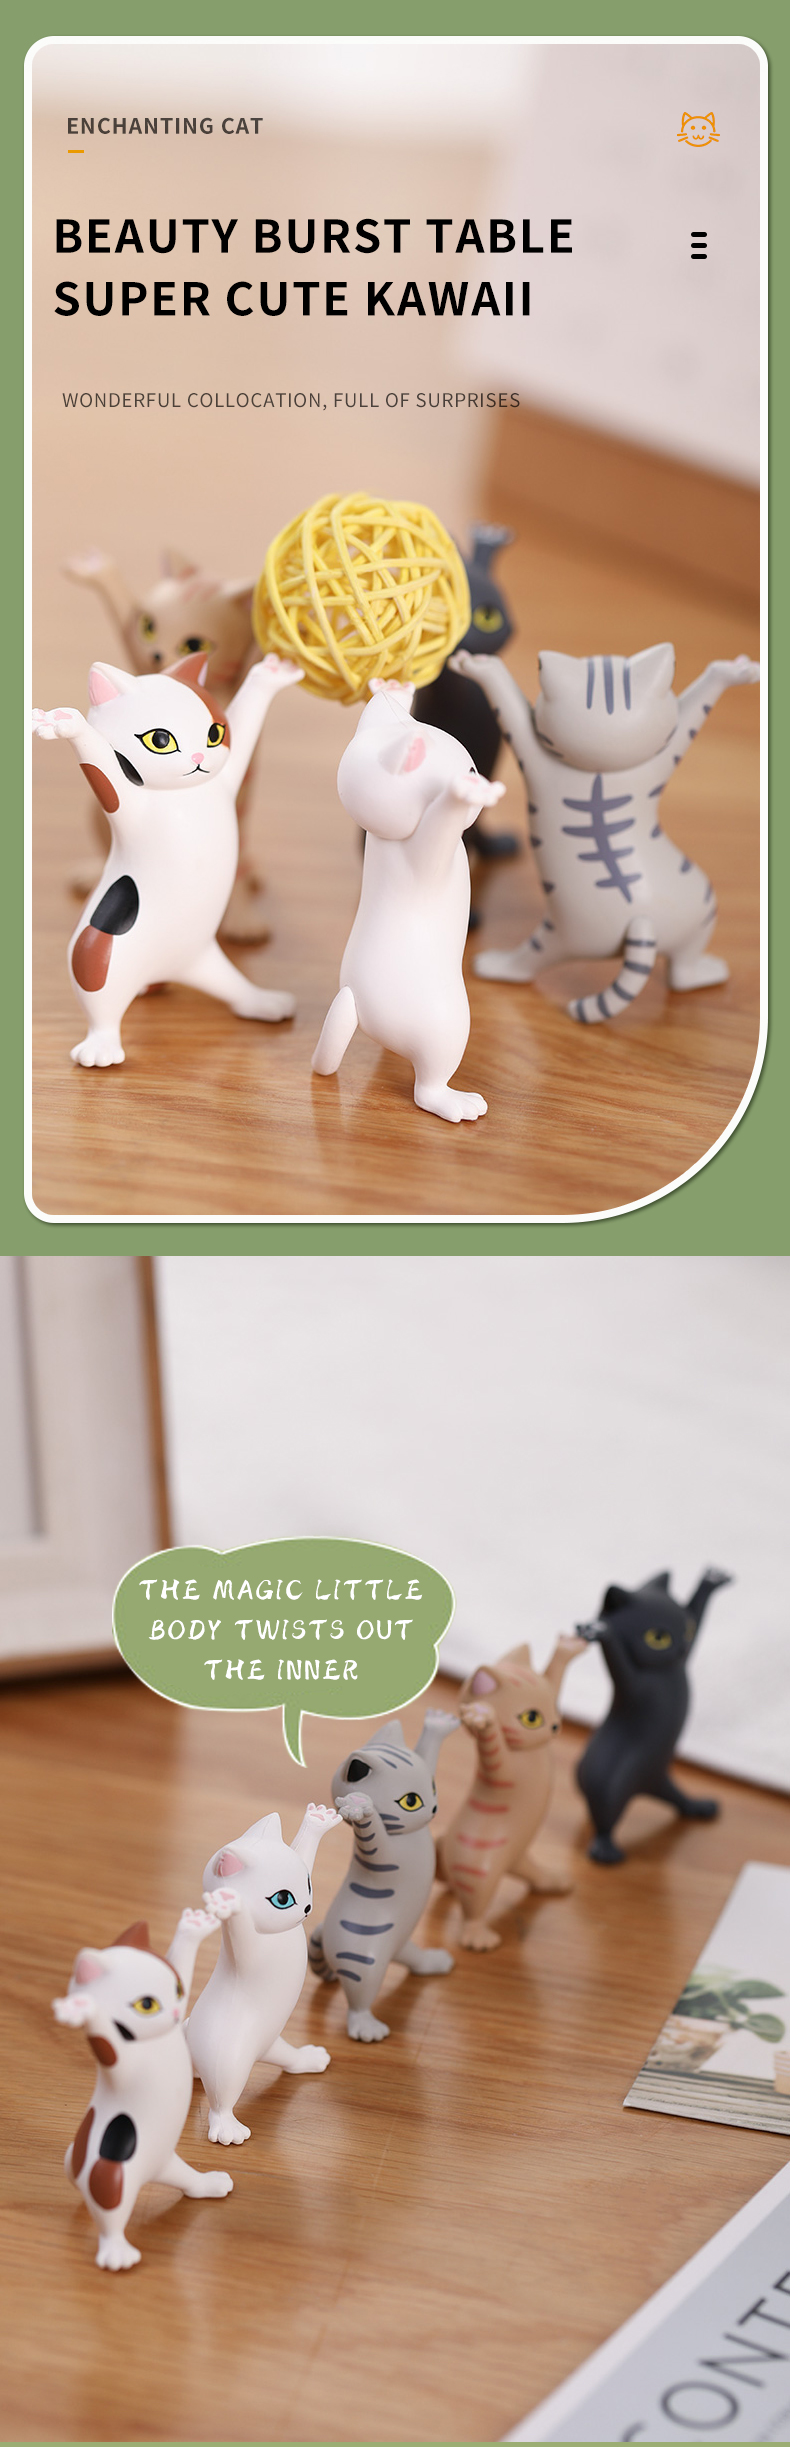 1-PC-Cartoon-Dancing-Cat-Figure-Doll-Figurines-Handmade-Enchanting-Kittens-Toy-for-Office-Pen-Holder-1838450-2